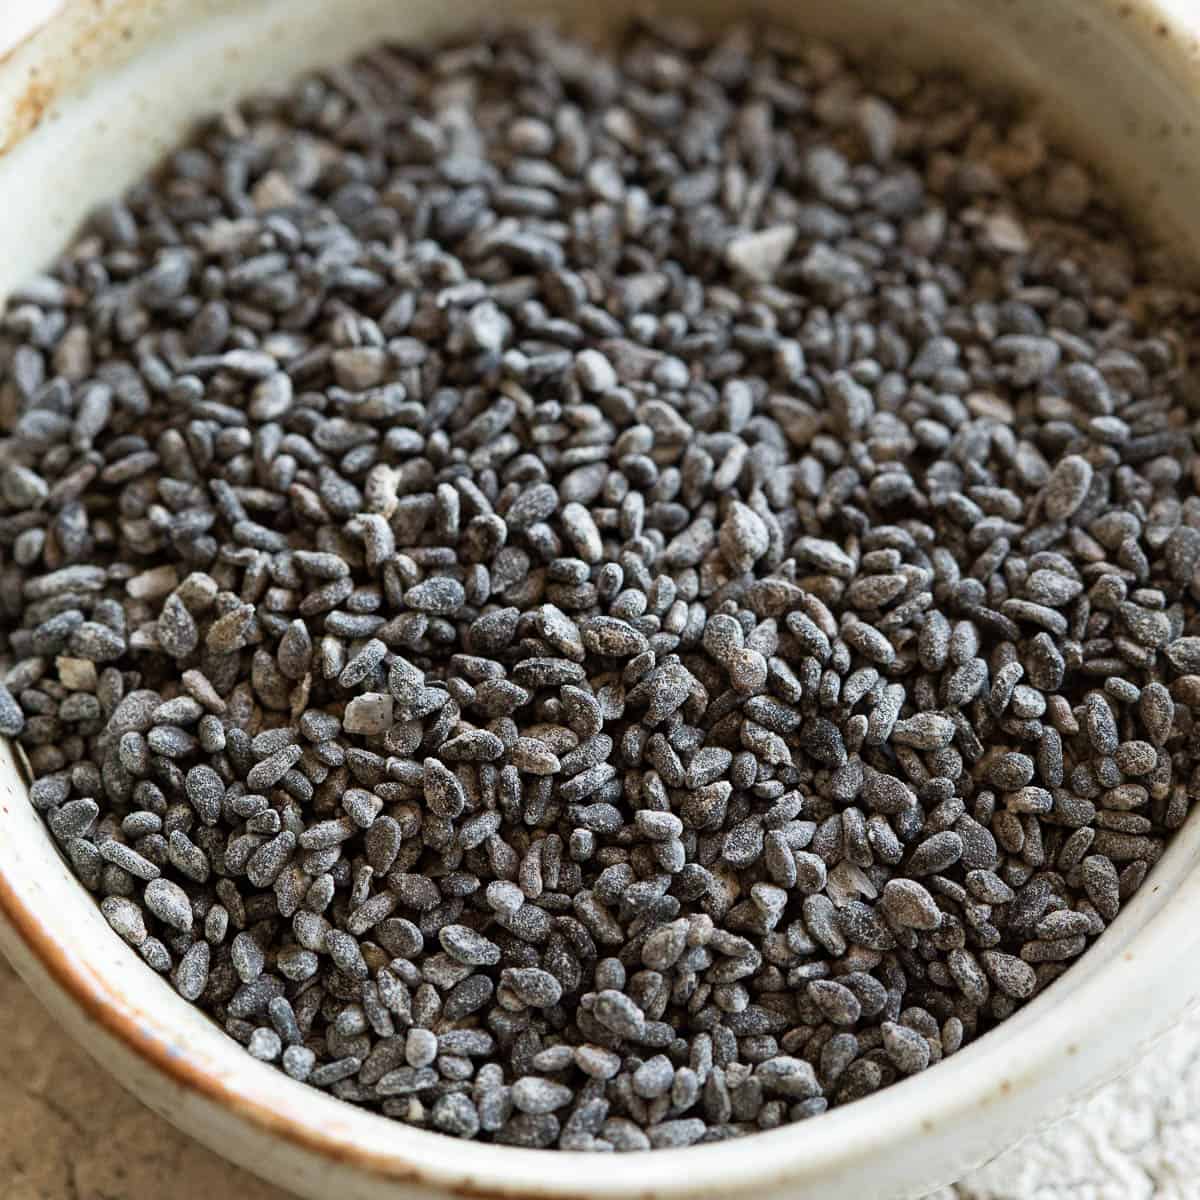 Salt coated black sesame seeds (gomasio) in a dish.